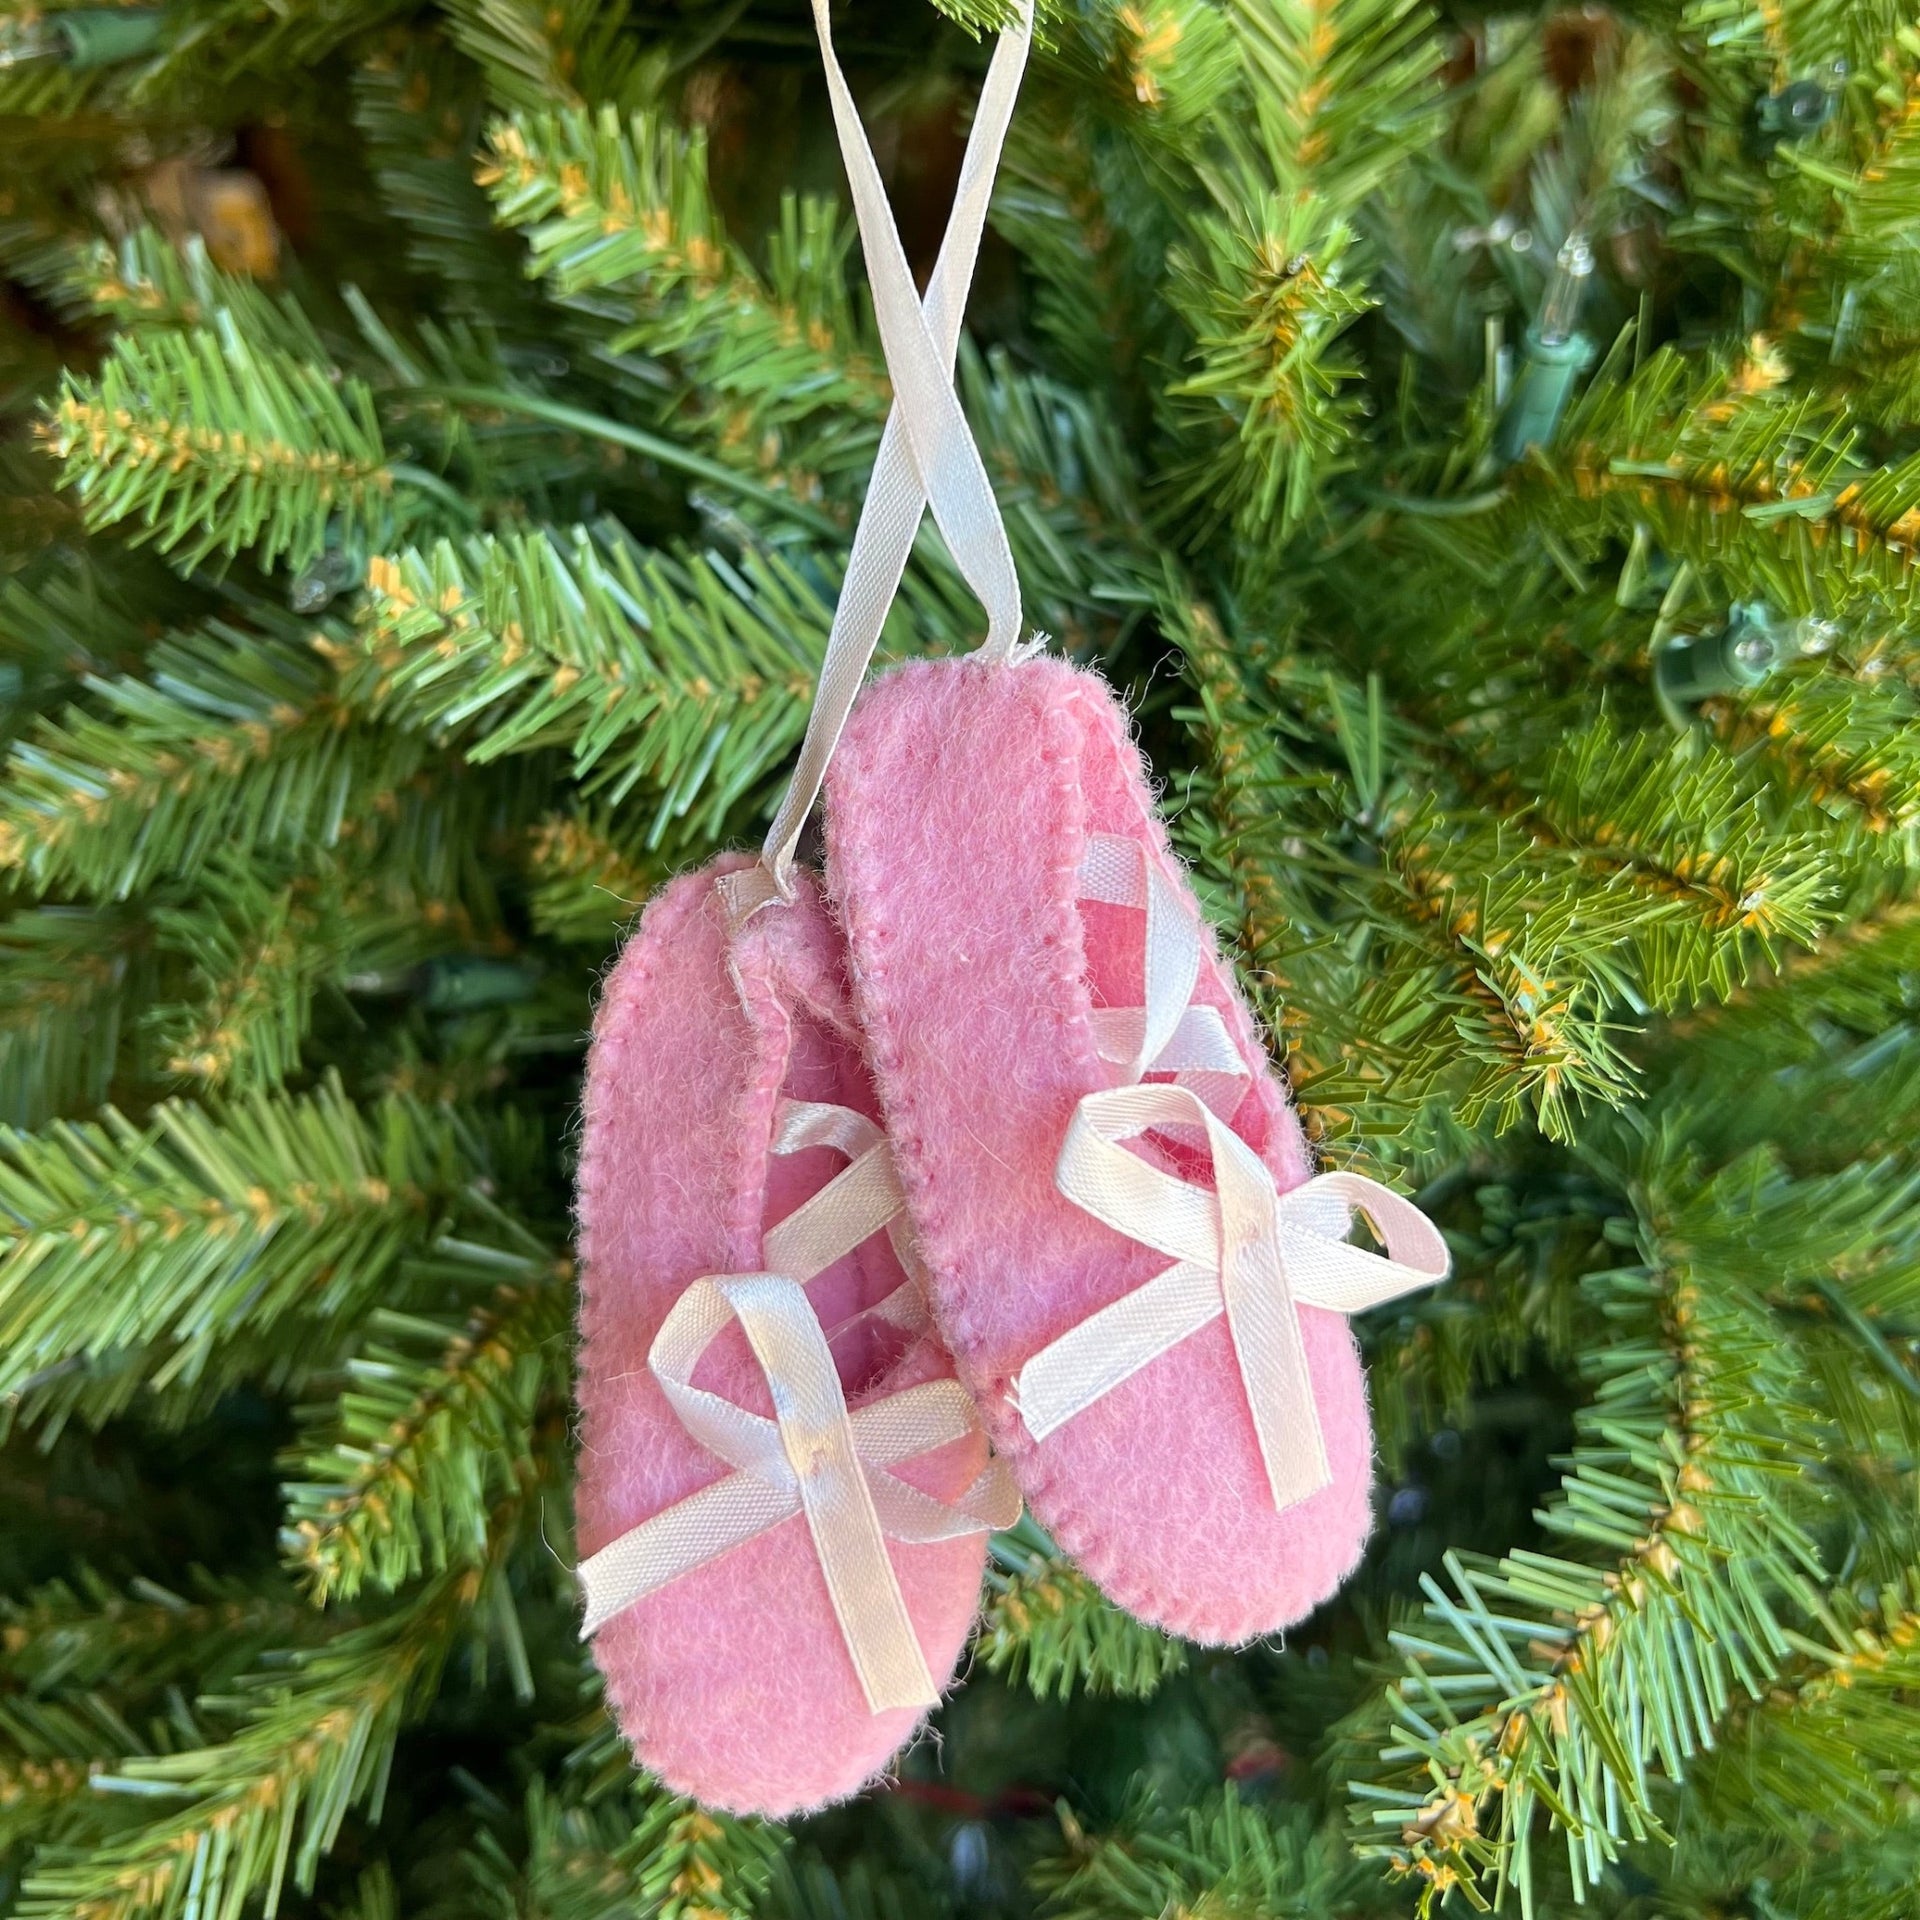 Handmade Pink Ballet Shoe Ornament hanging on Christmas Tree